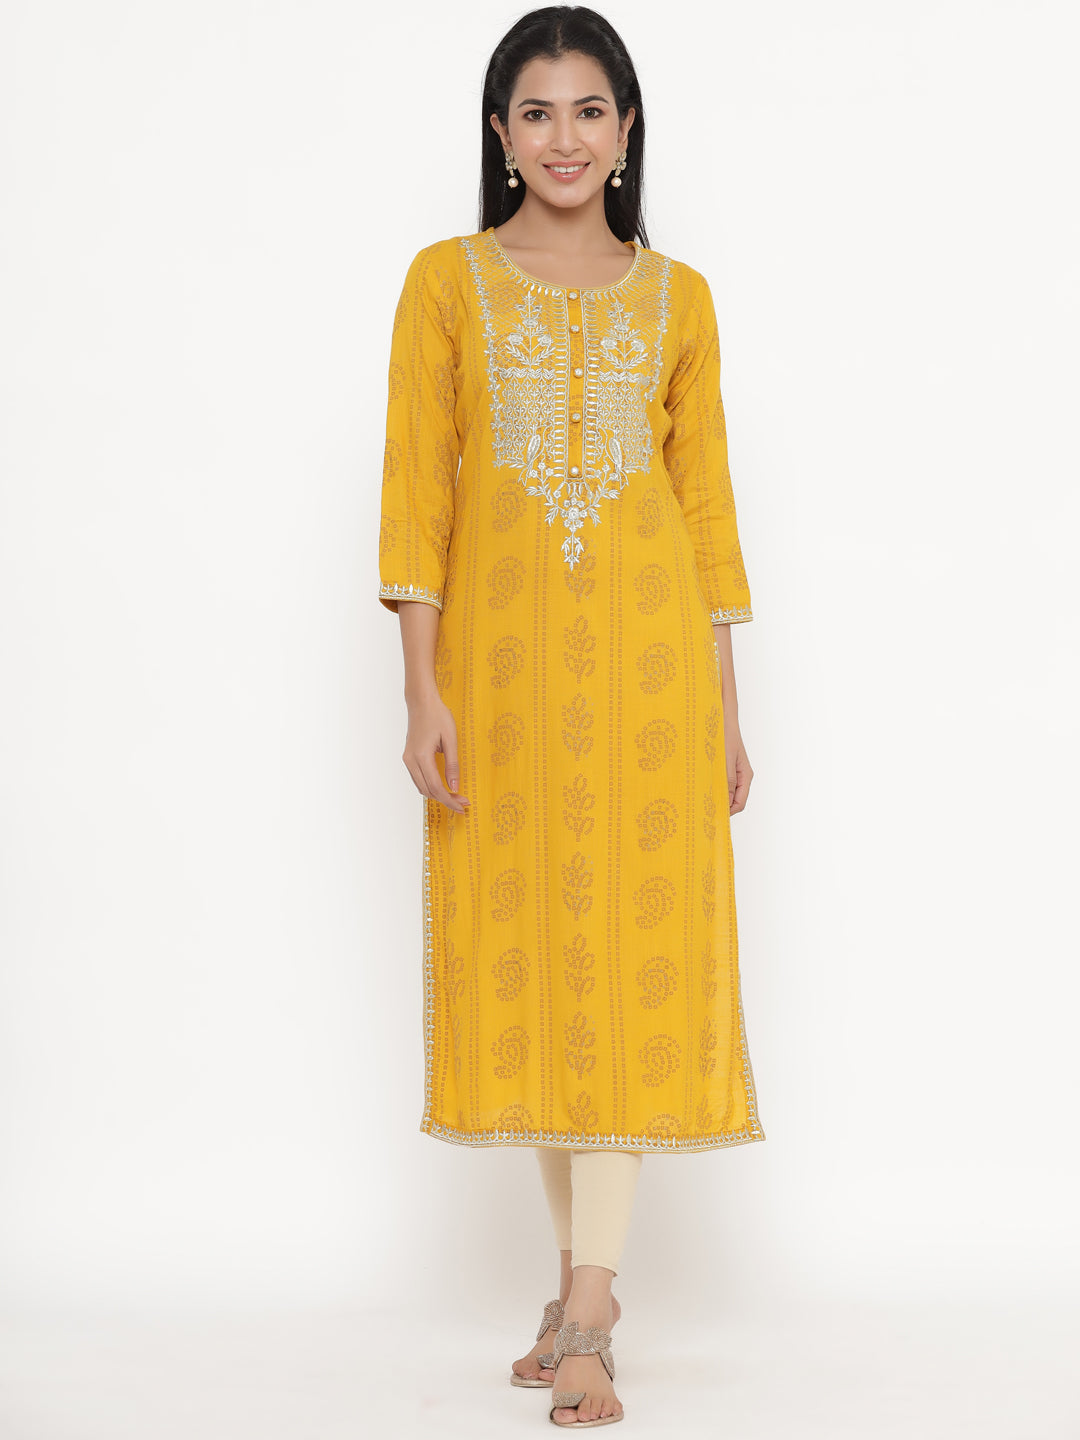 Women's Self Desgin Rayon Fabric Straight Kurta Yellow Color - Kipek